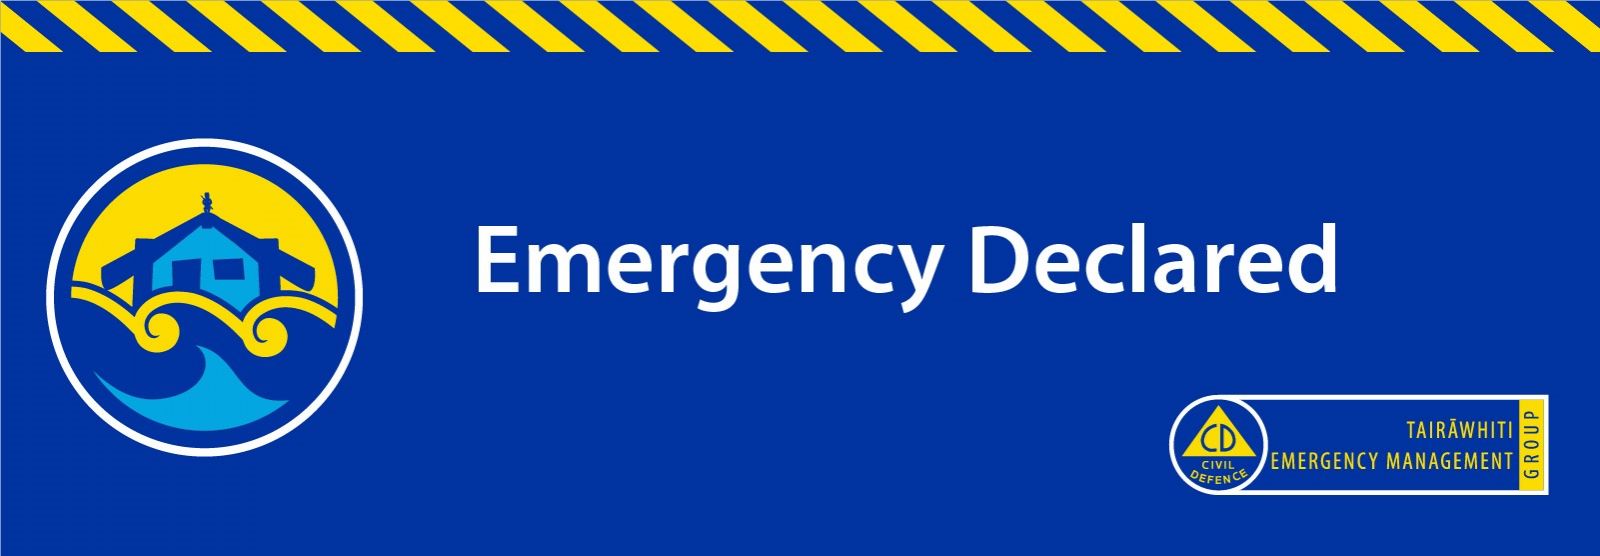 Emergency Declared banner image